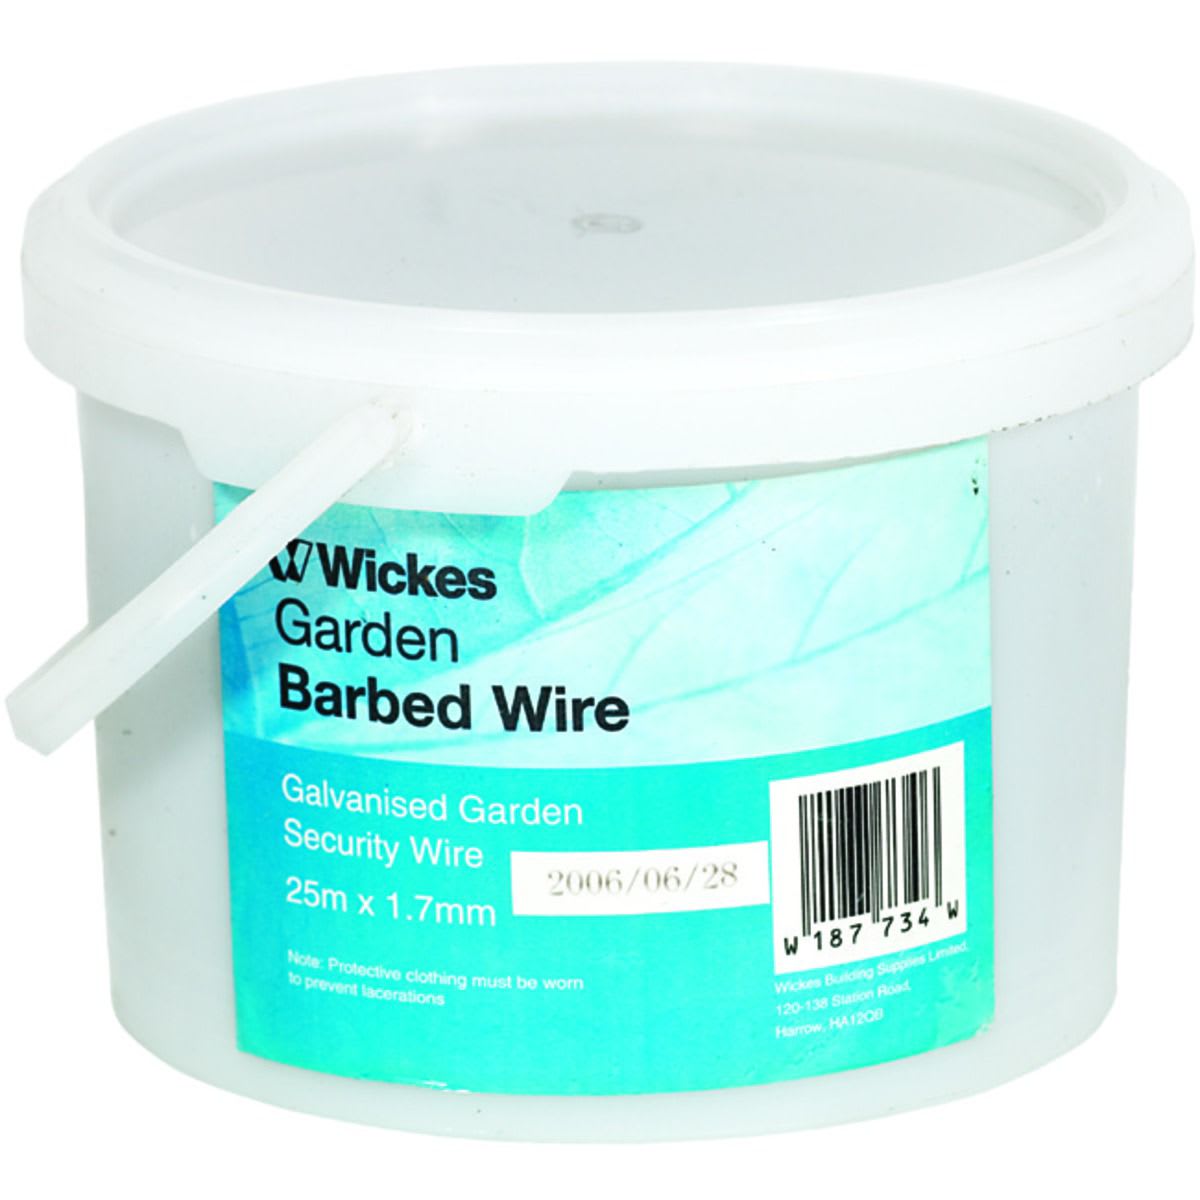 Wickes Galvanised Garden Barbed Wire - 1.7mm x